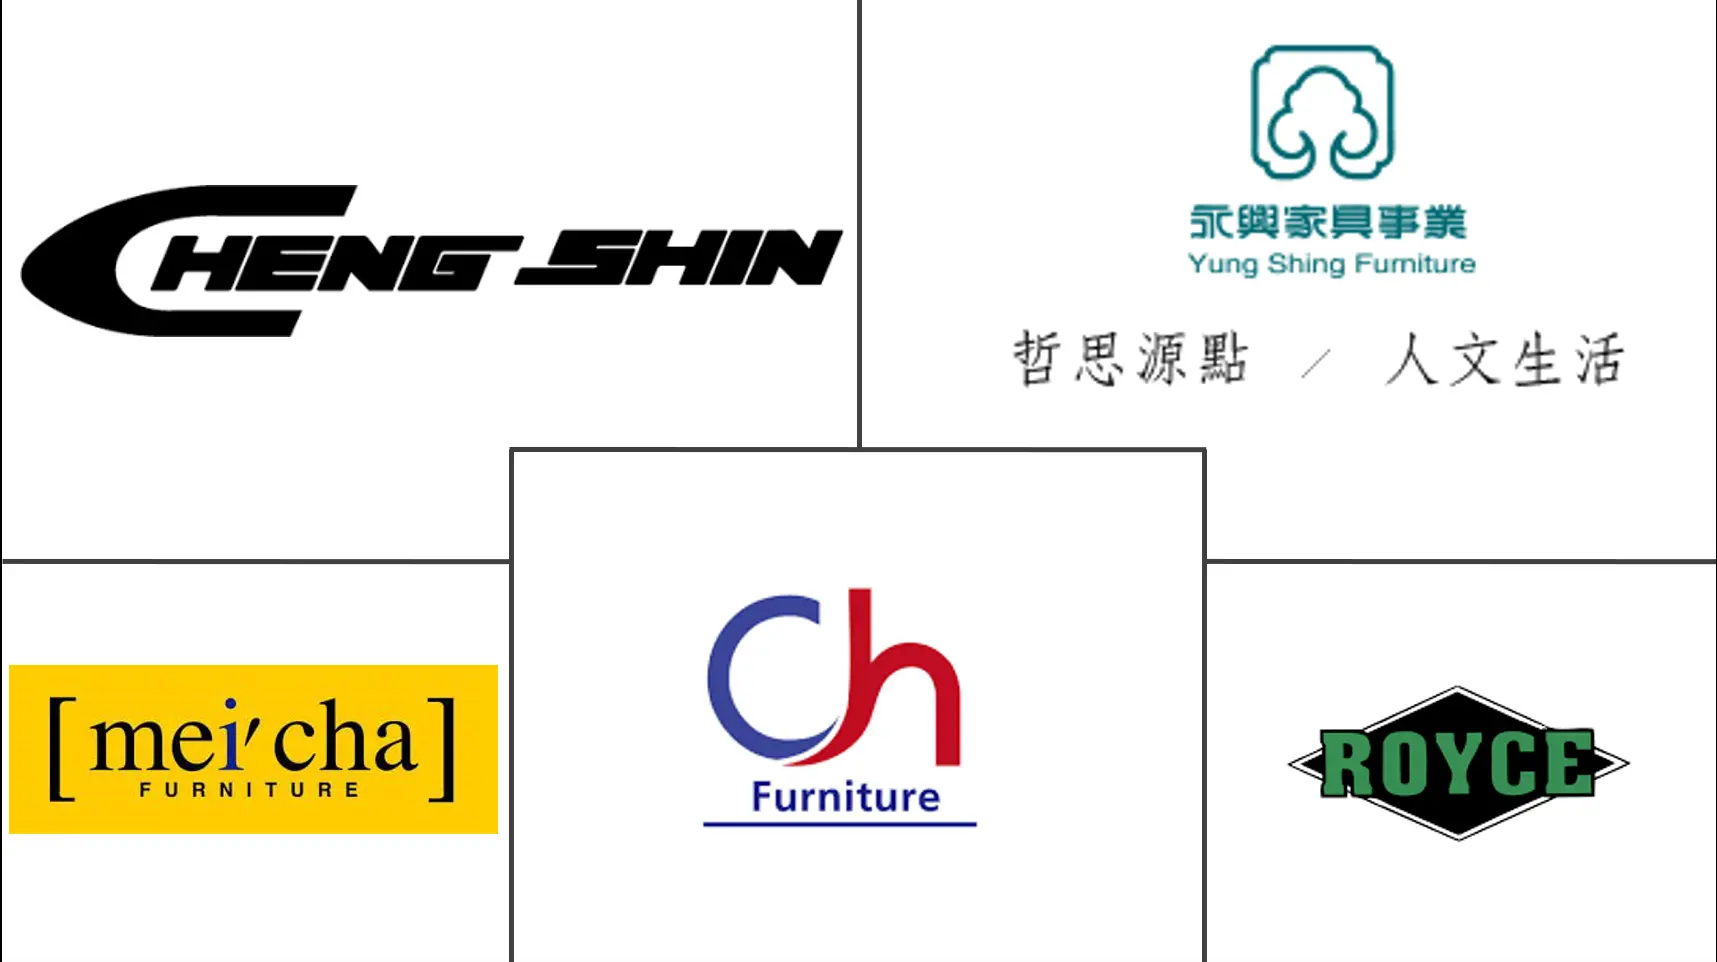 台湾の家庭用家具市場の主要企業